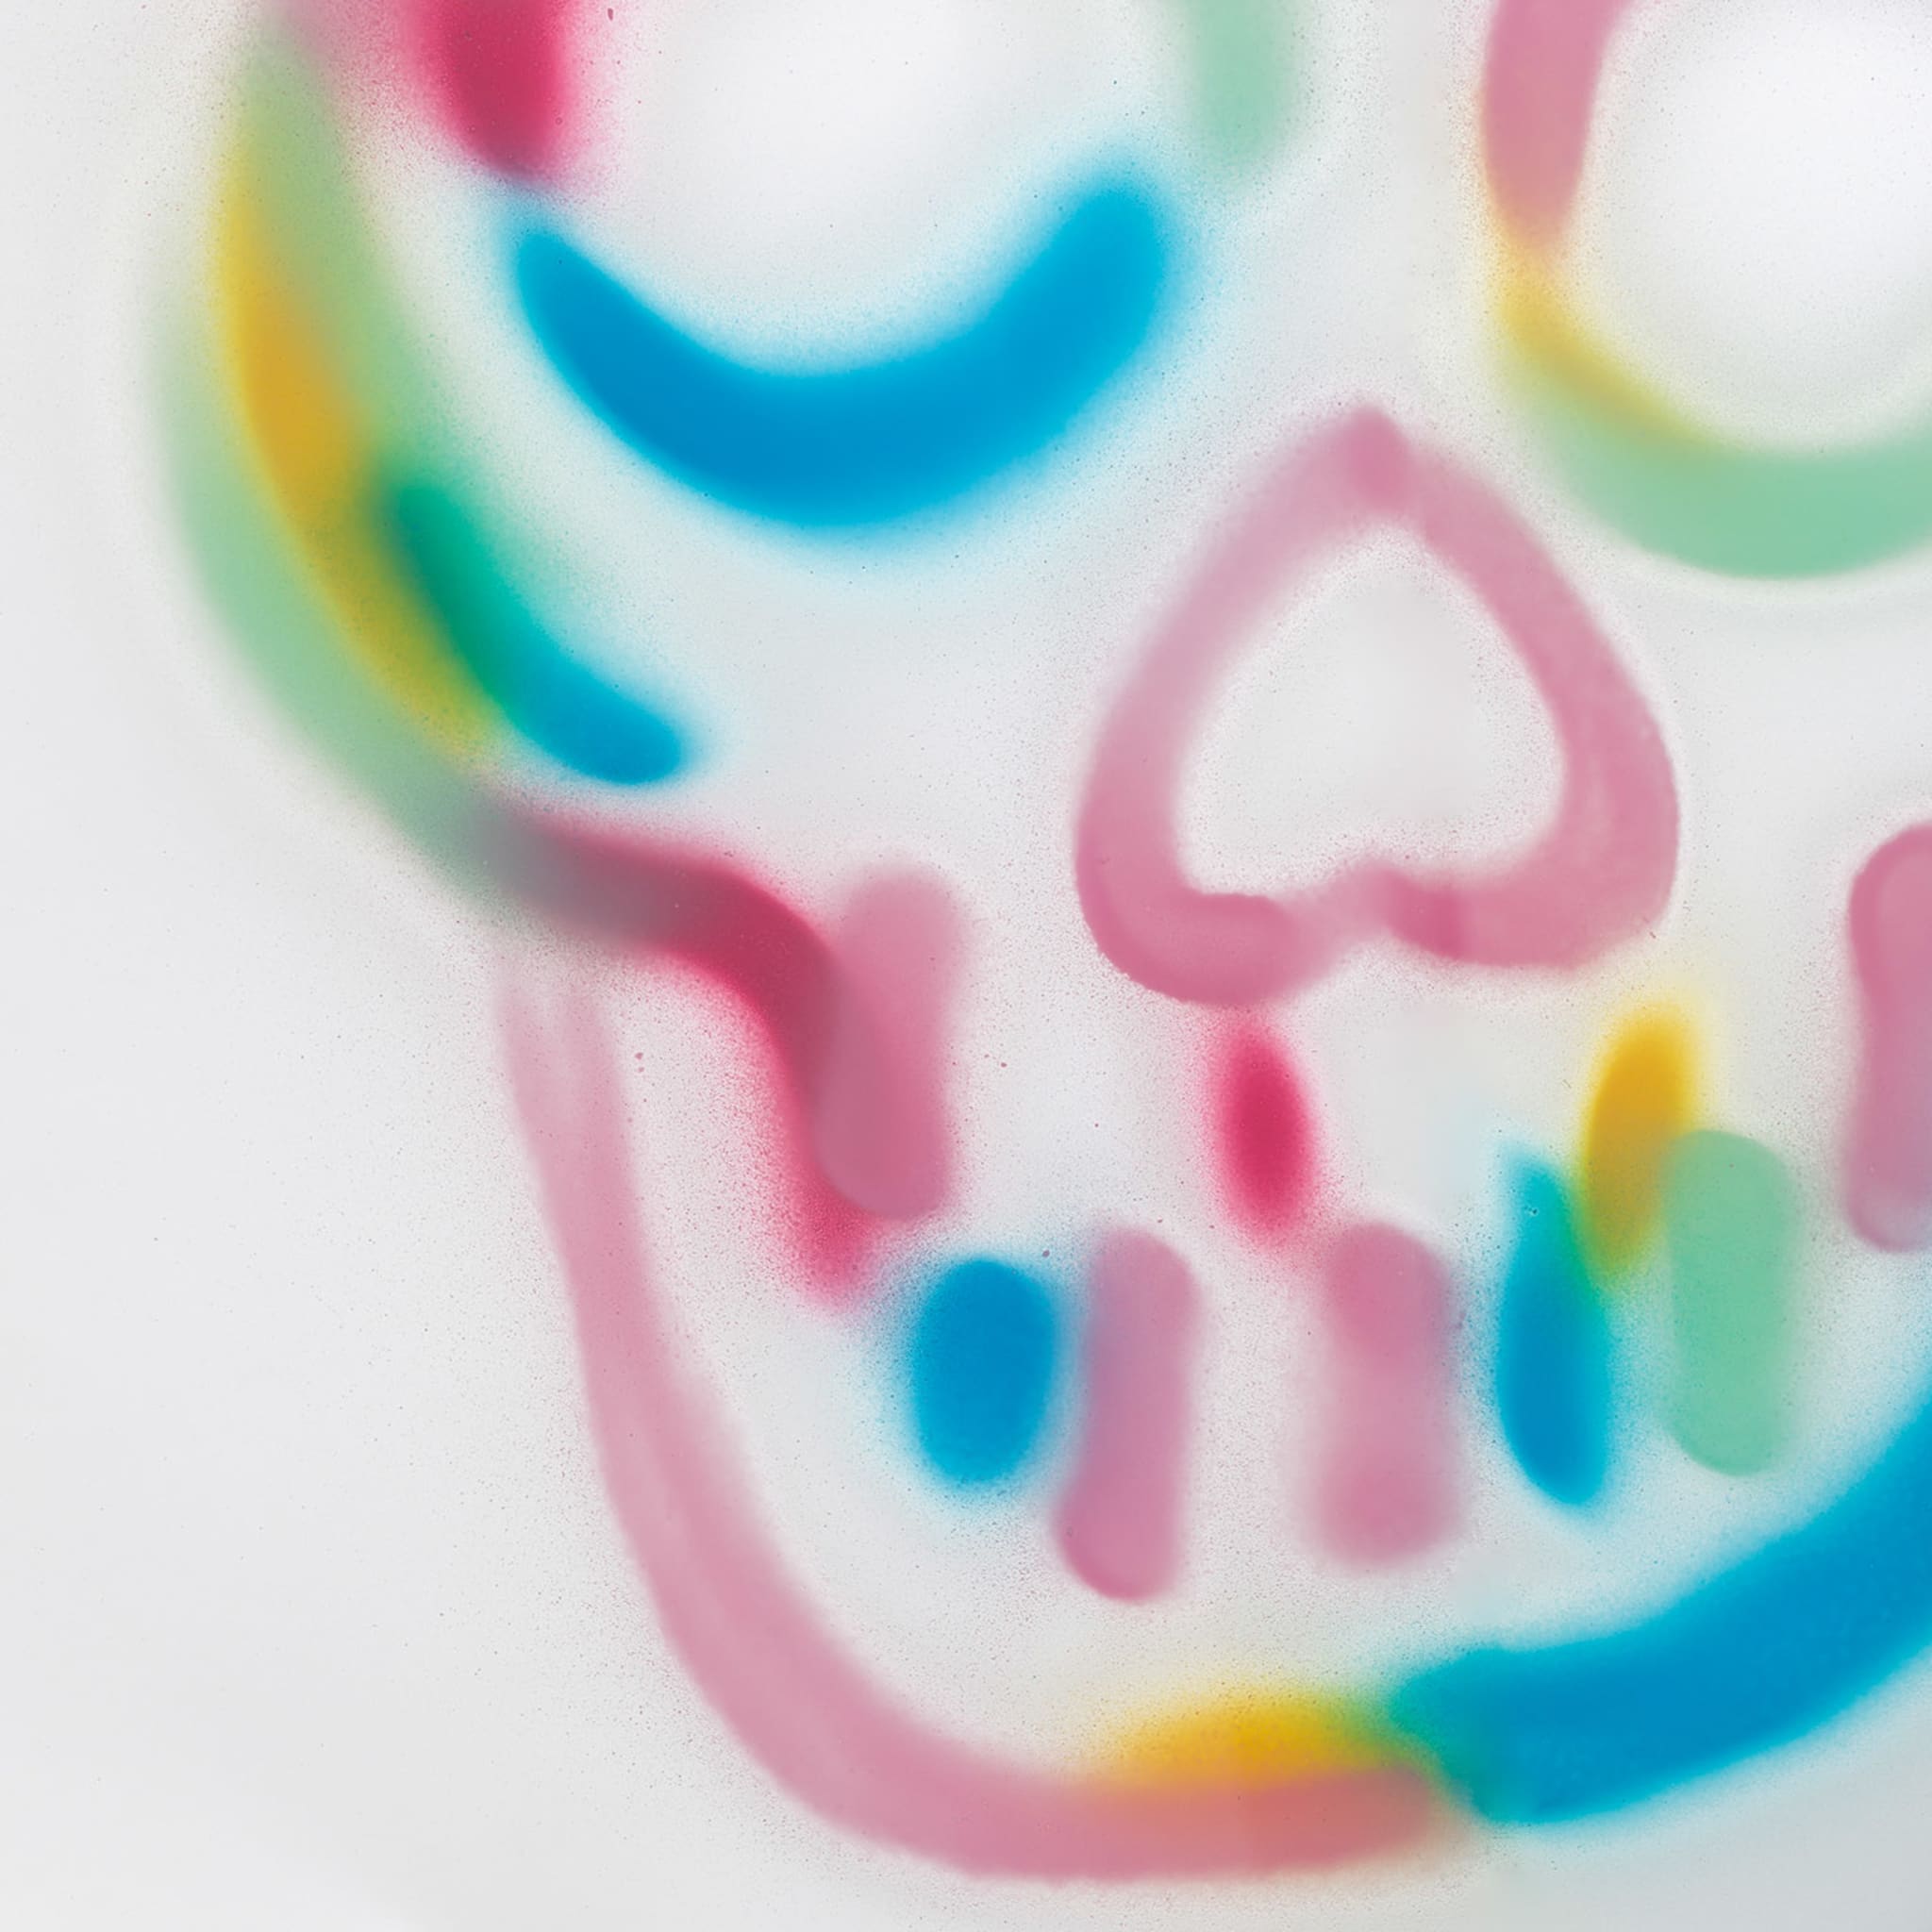 Fun Skull of Colors Mirror #2 by Bradley Theodore - Alternative view 1